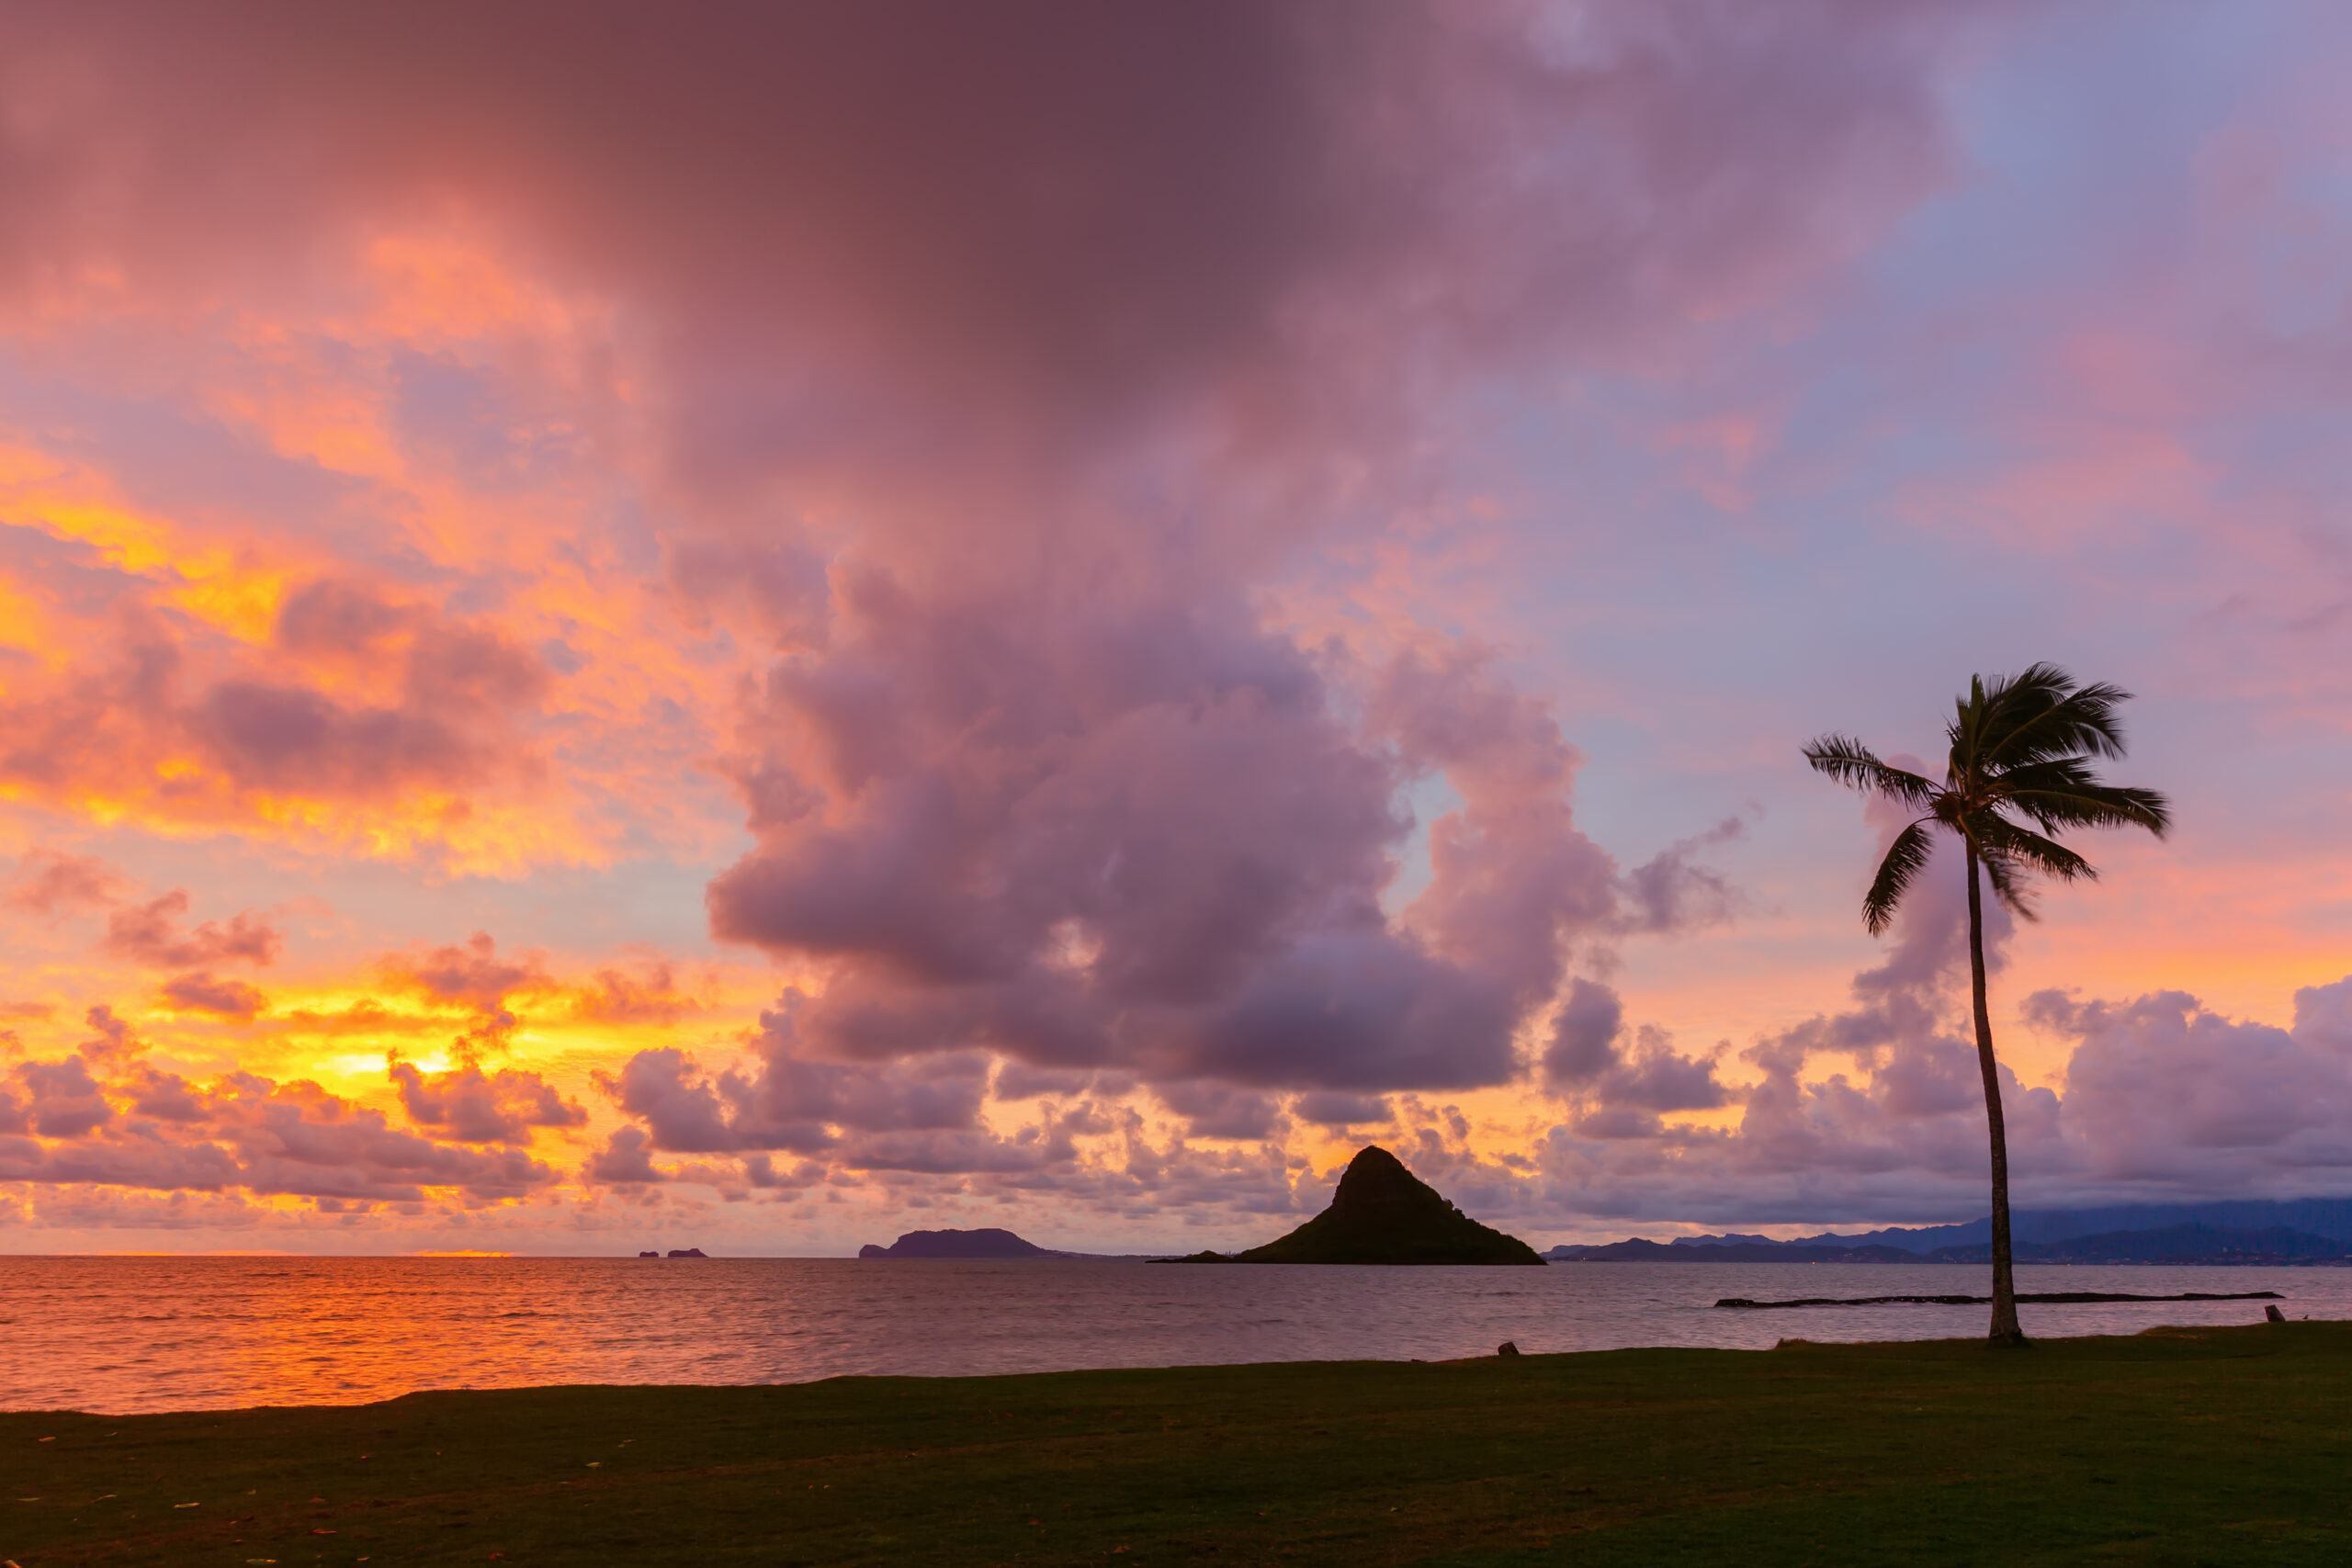 Sunrise at Kualoa Regional Park in Oahu, Hawaii